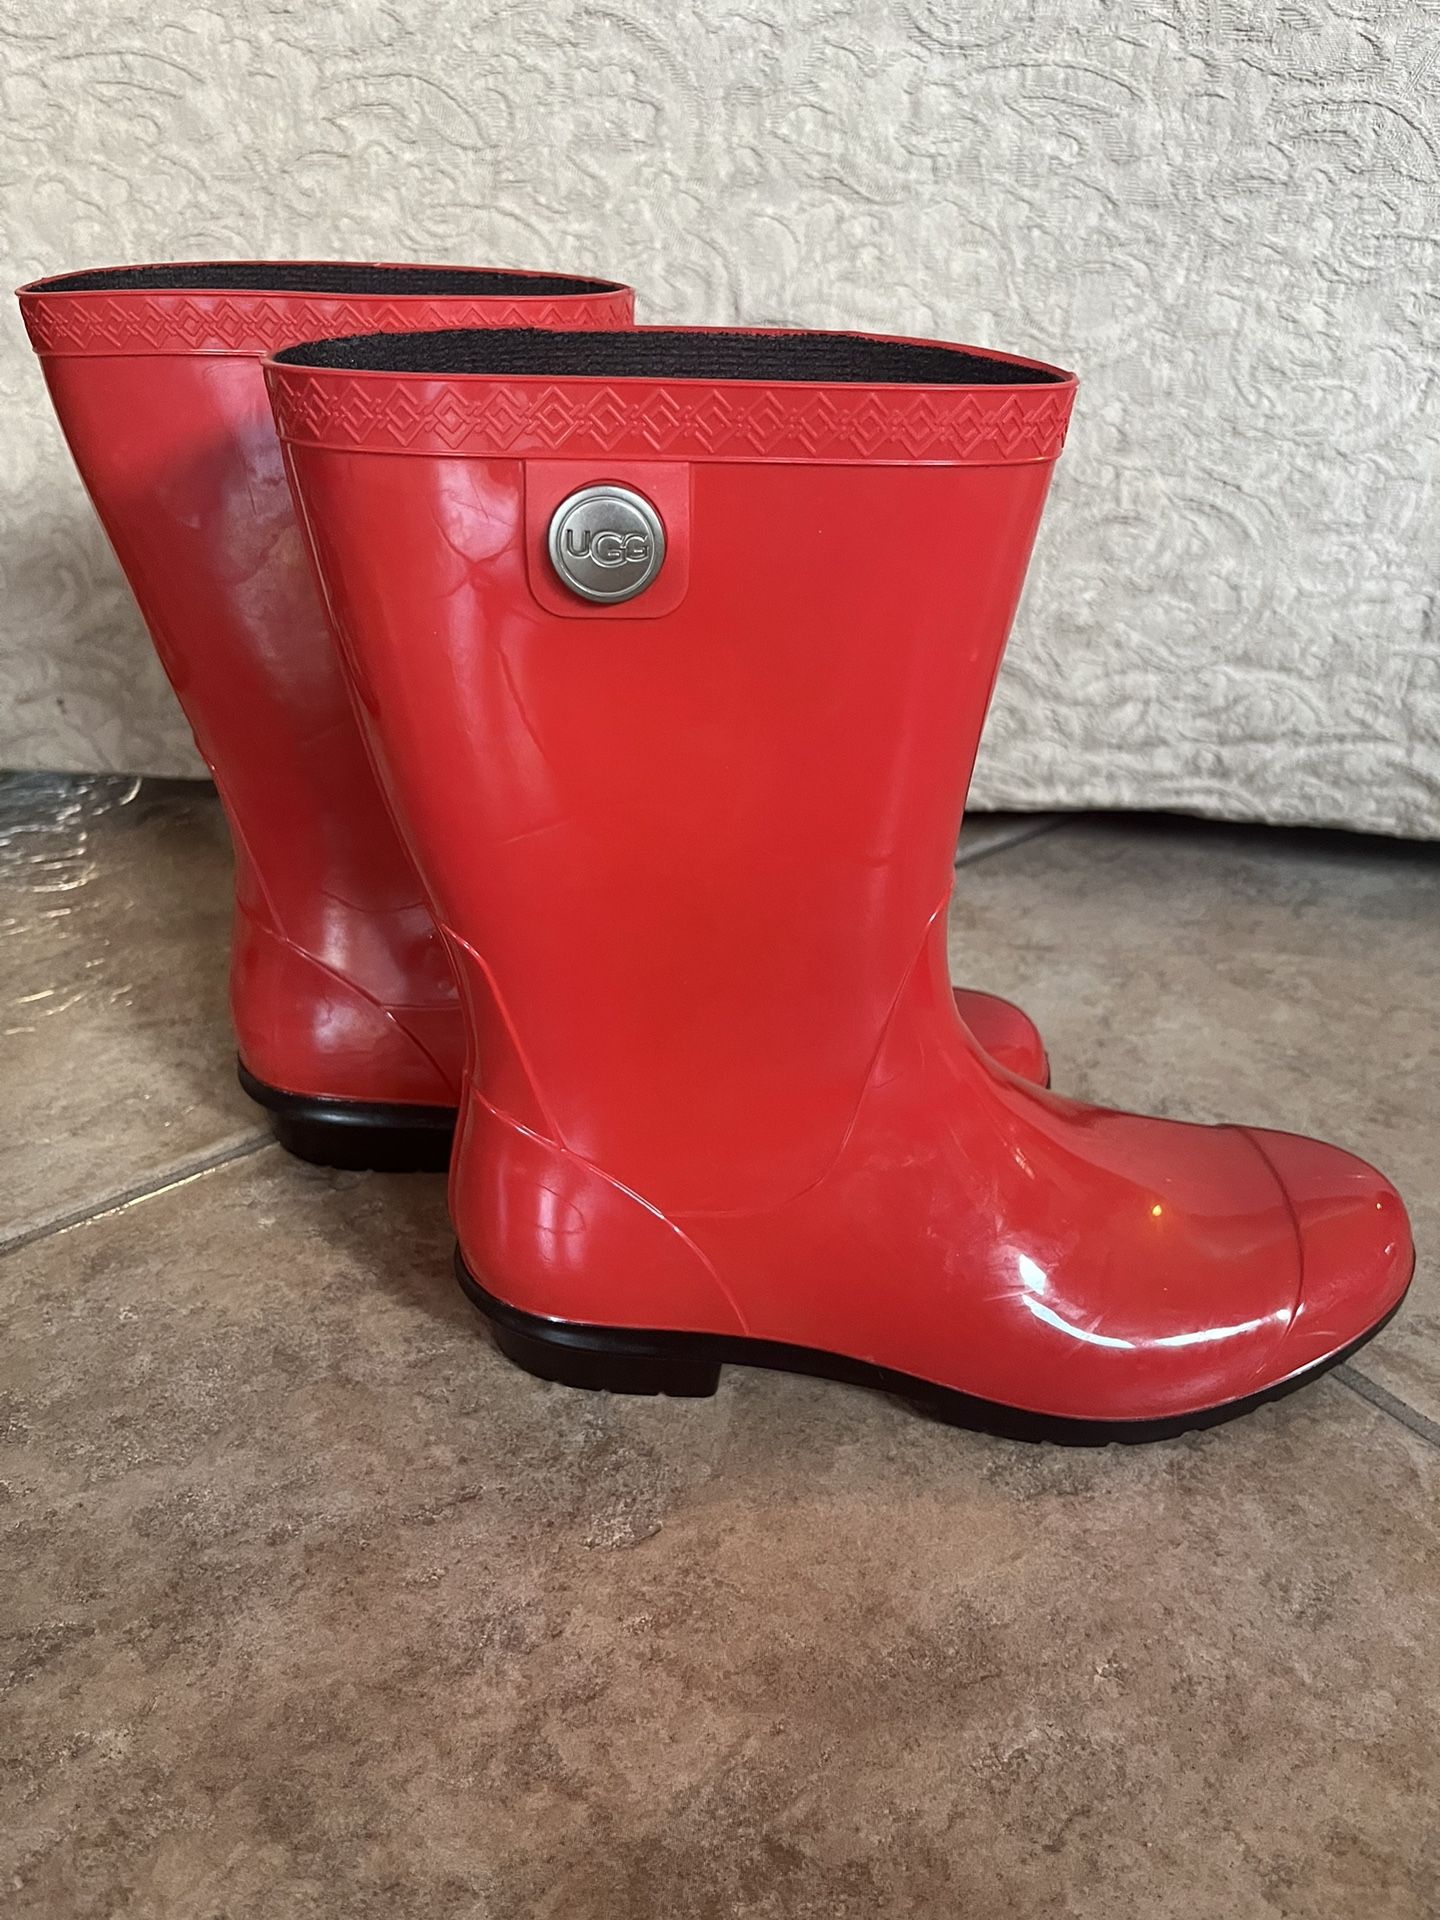 UGG Rain/gardening Boots NEW  Size 9 Women’s 